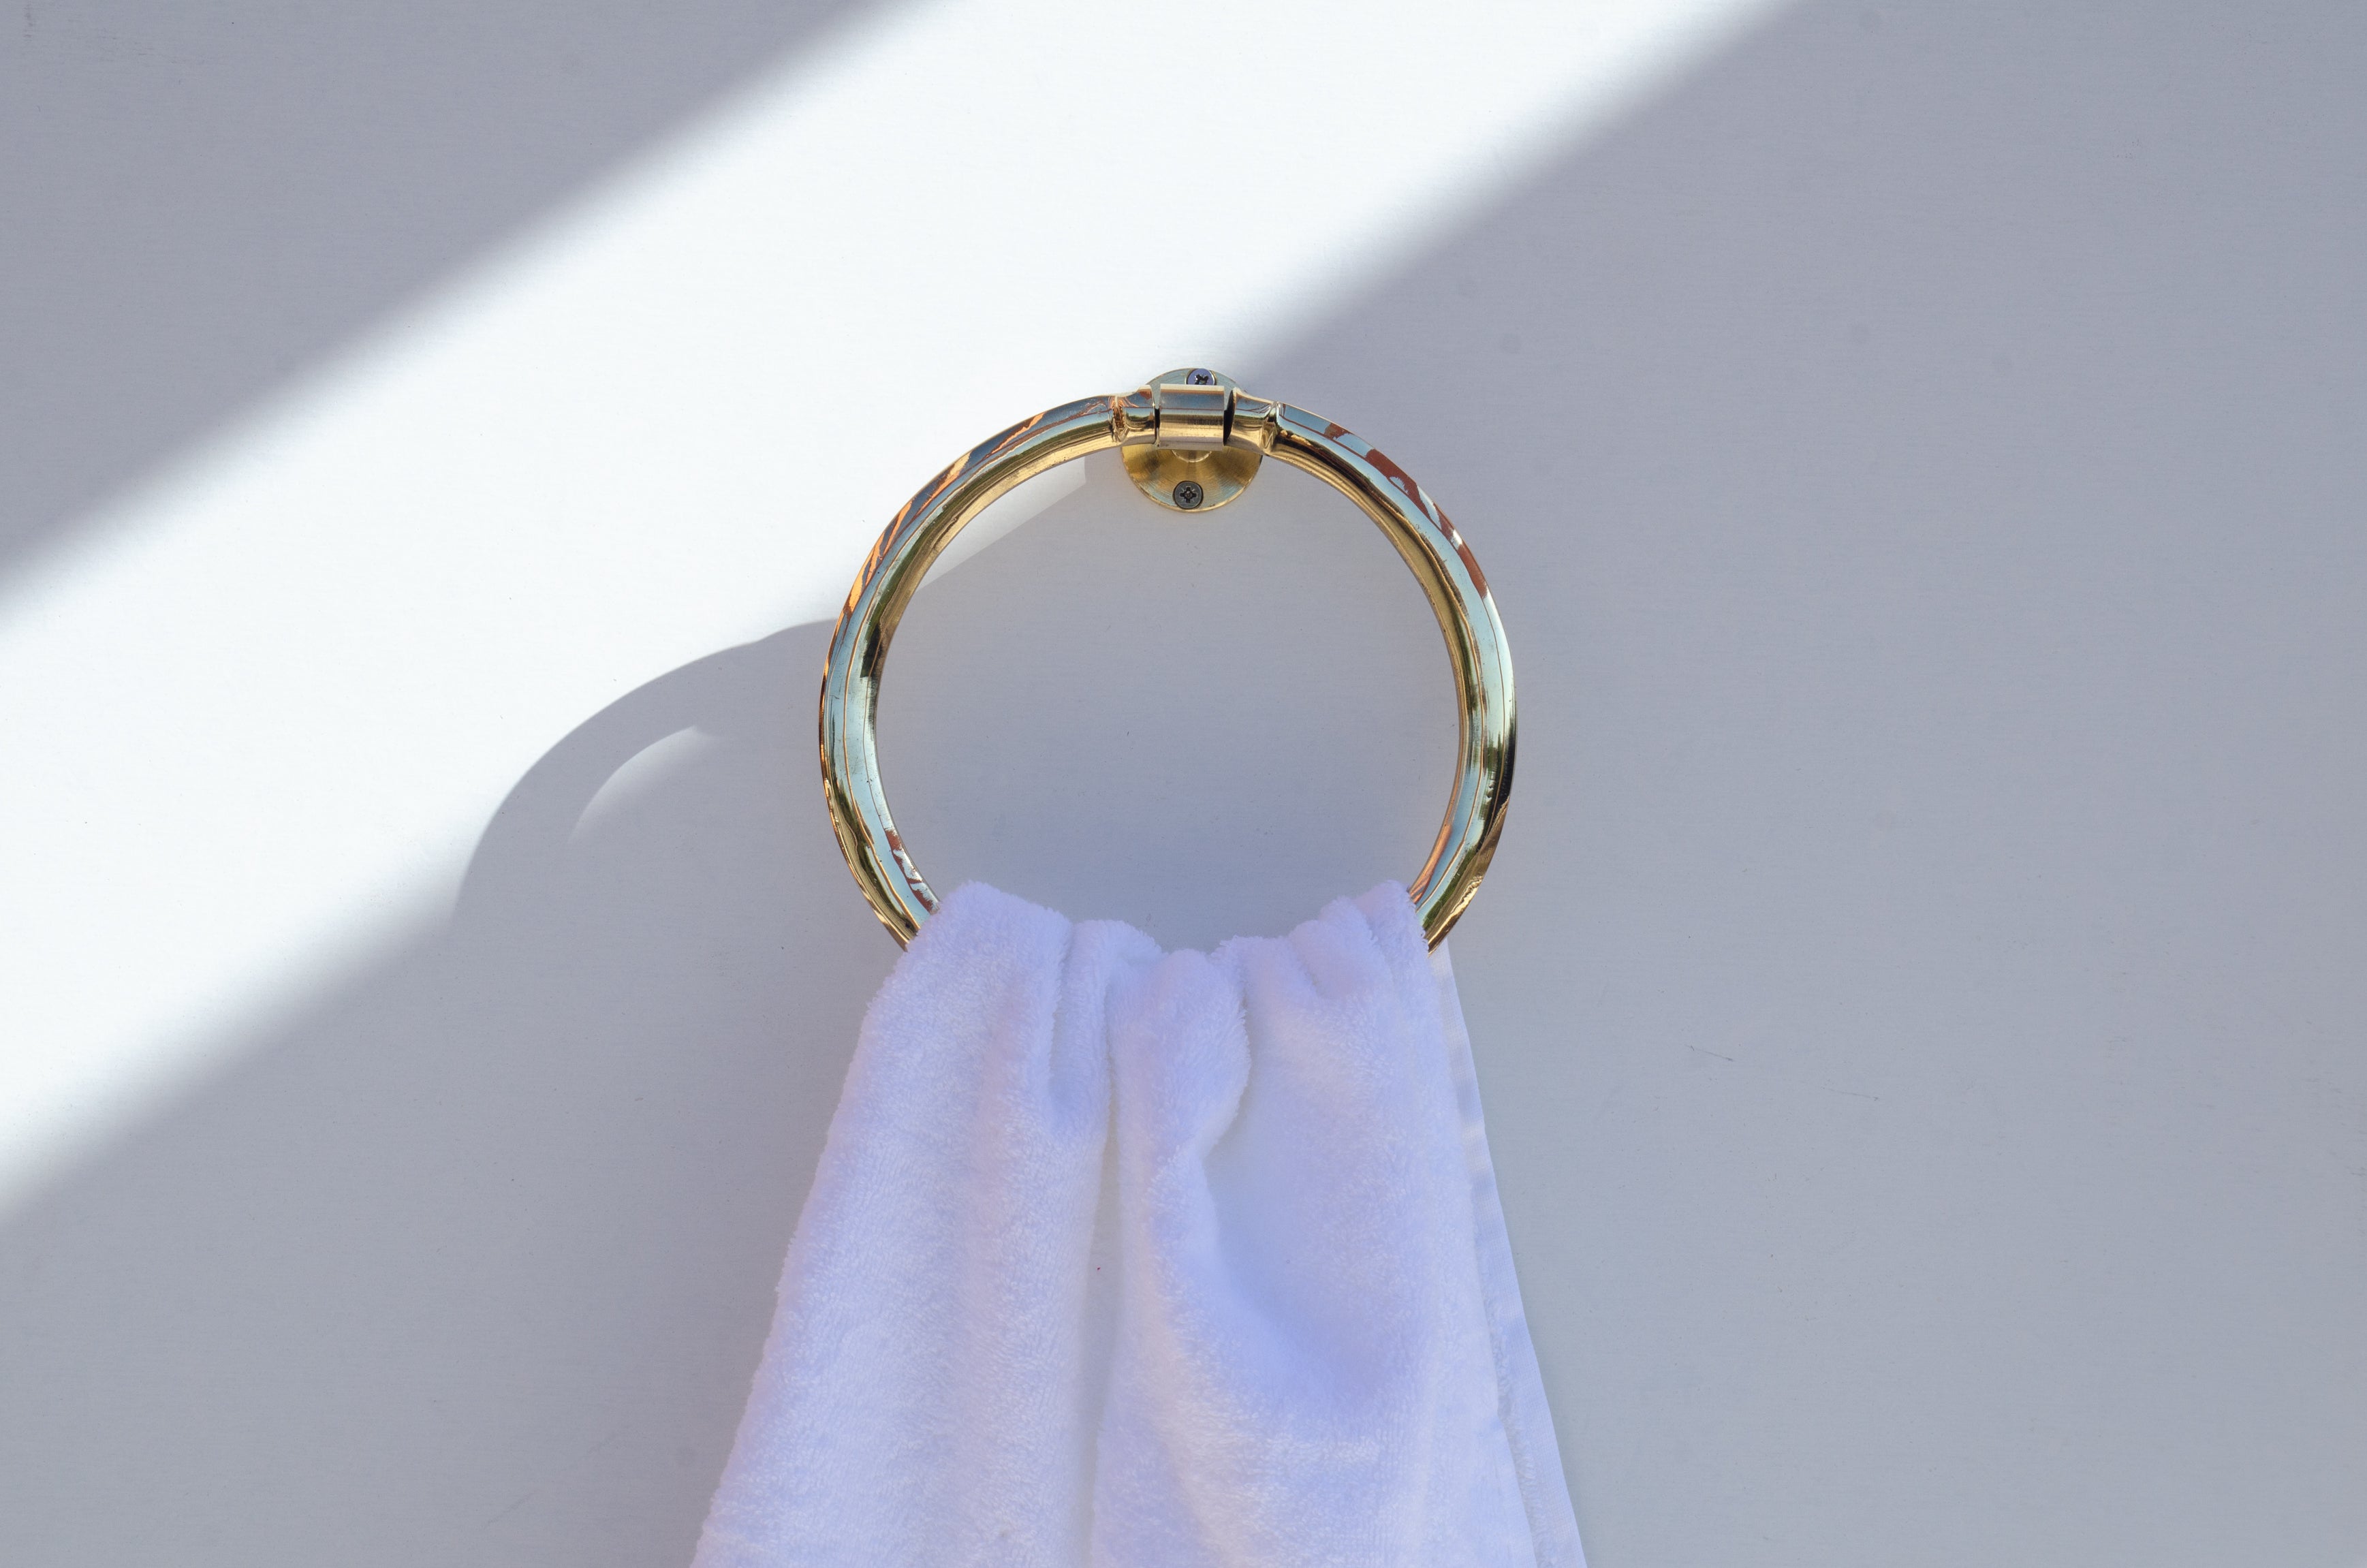 Brass Towel Ring - Bathroom Towel Holder ISA03